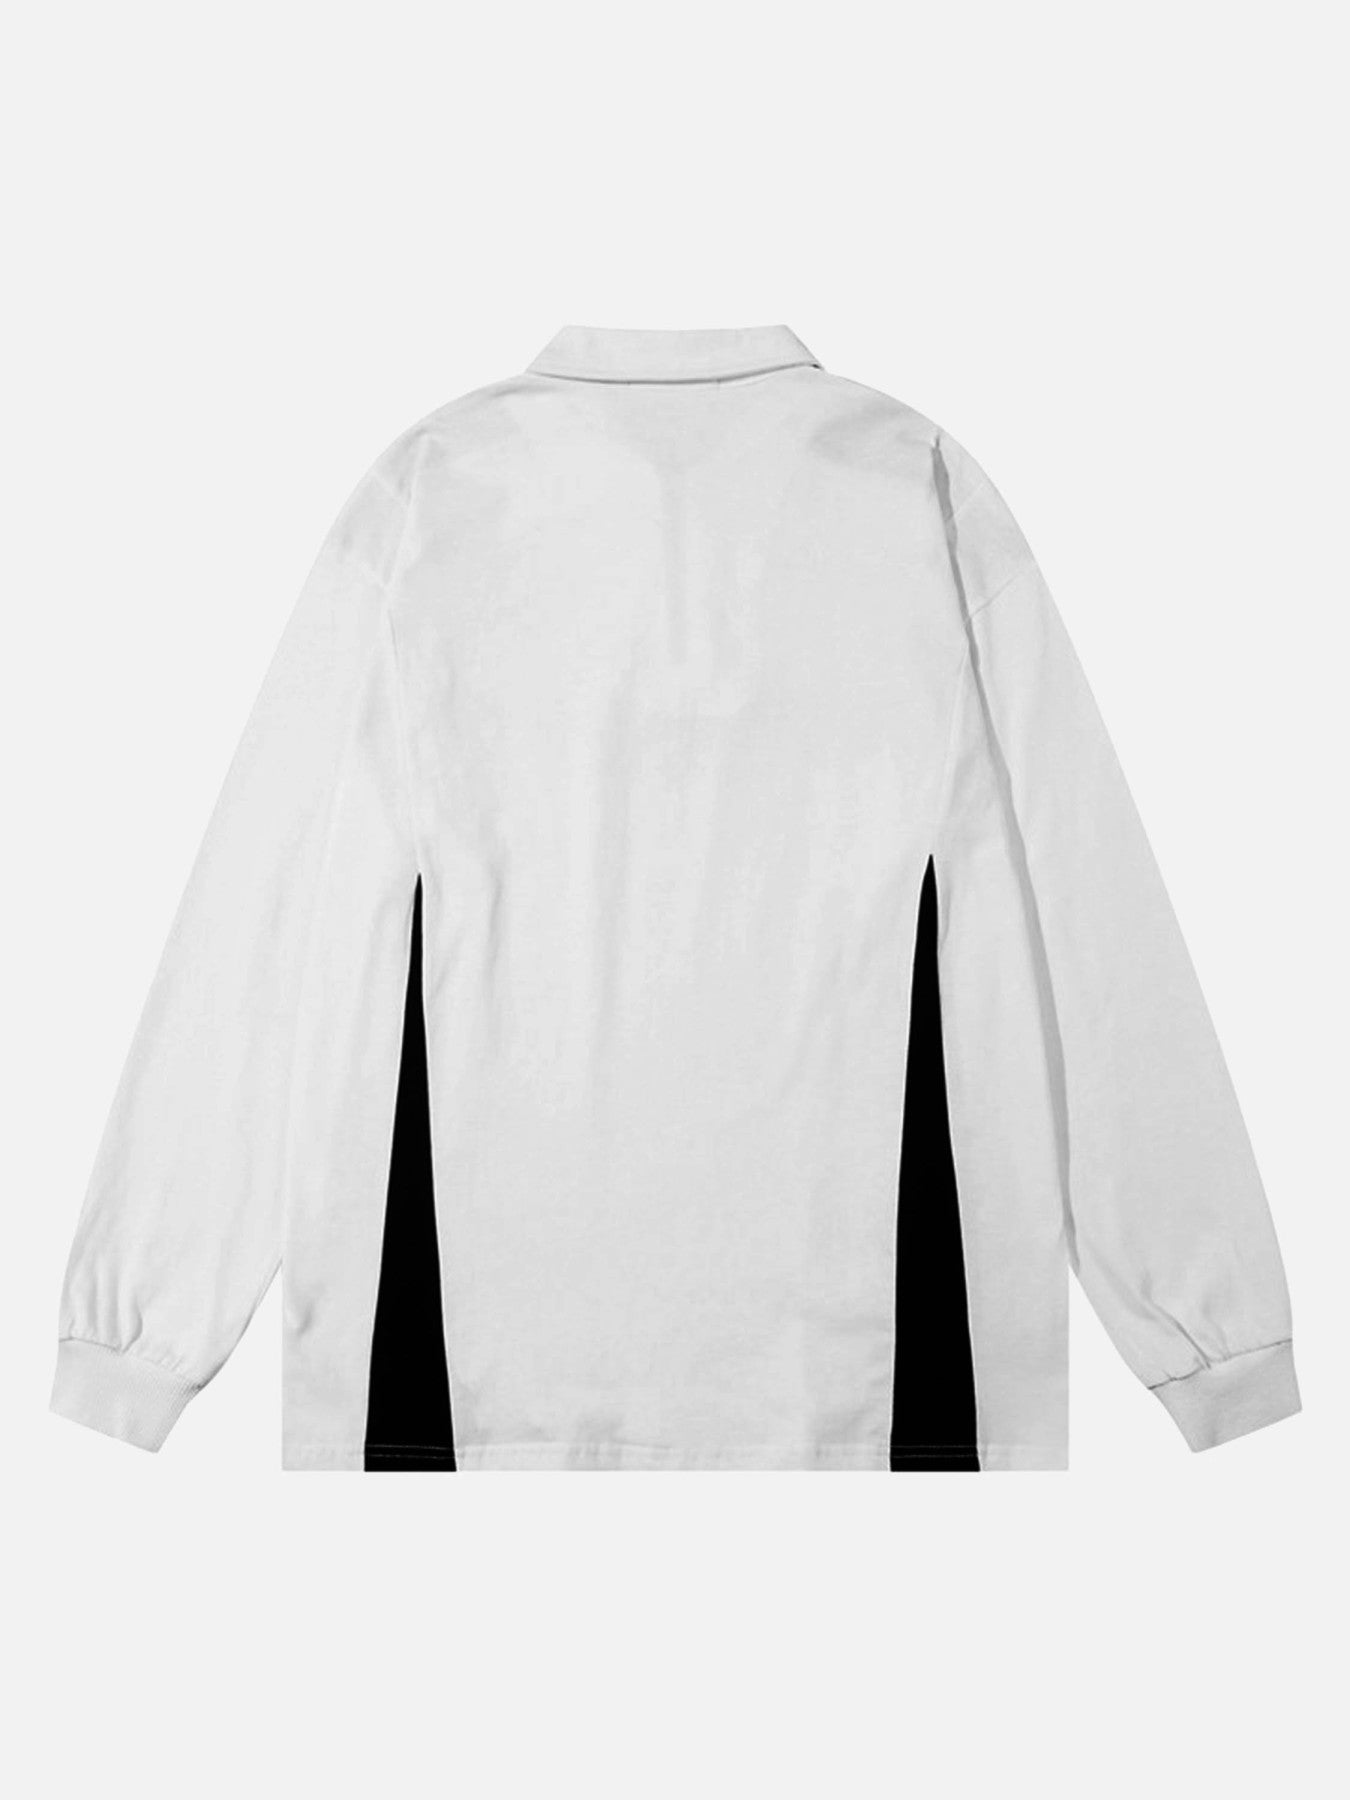 Thesupermade High Street Racing Suit Long Sleeve Polo Shirt - 1980